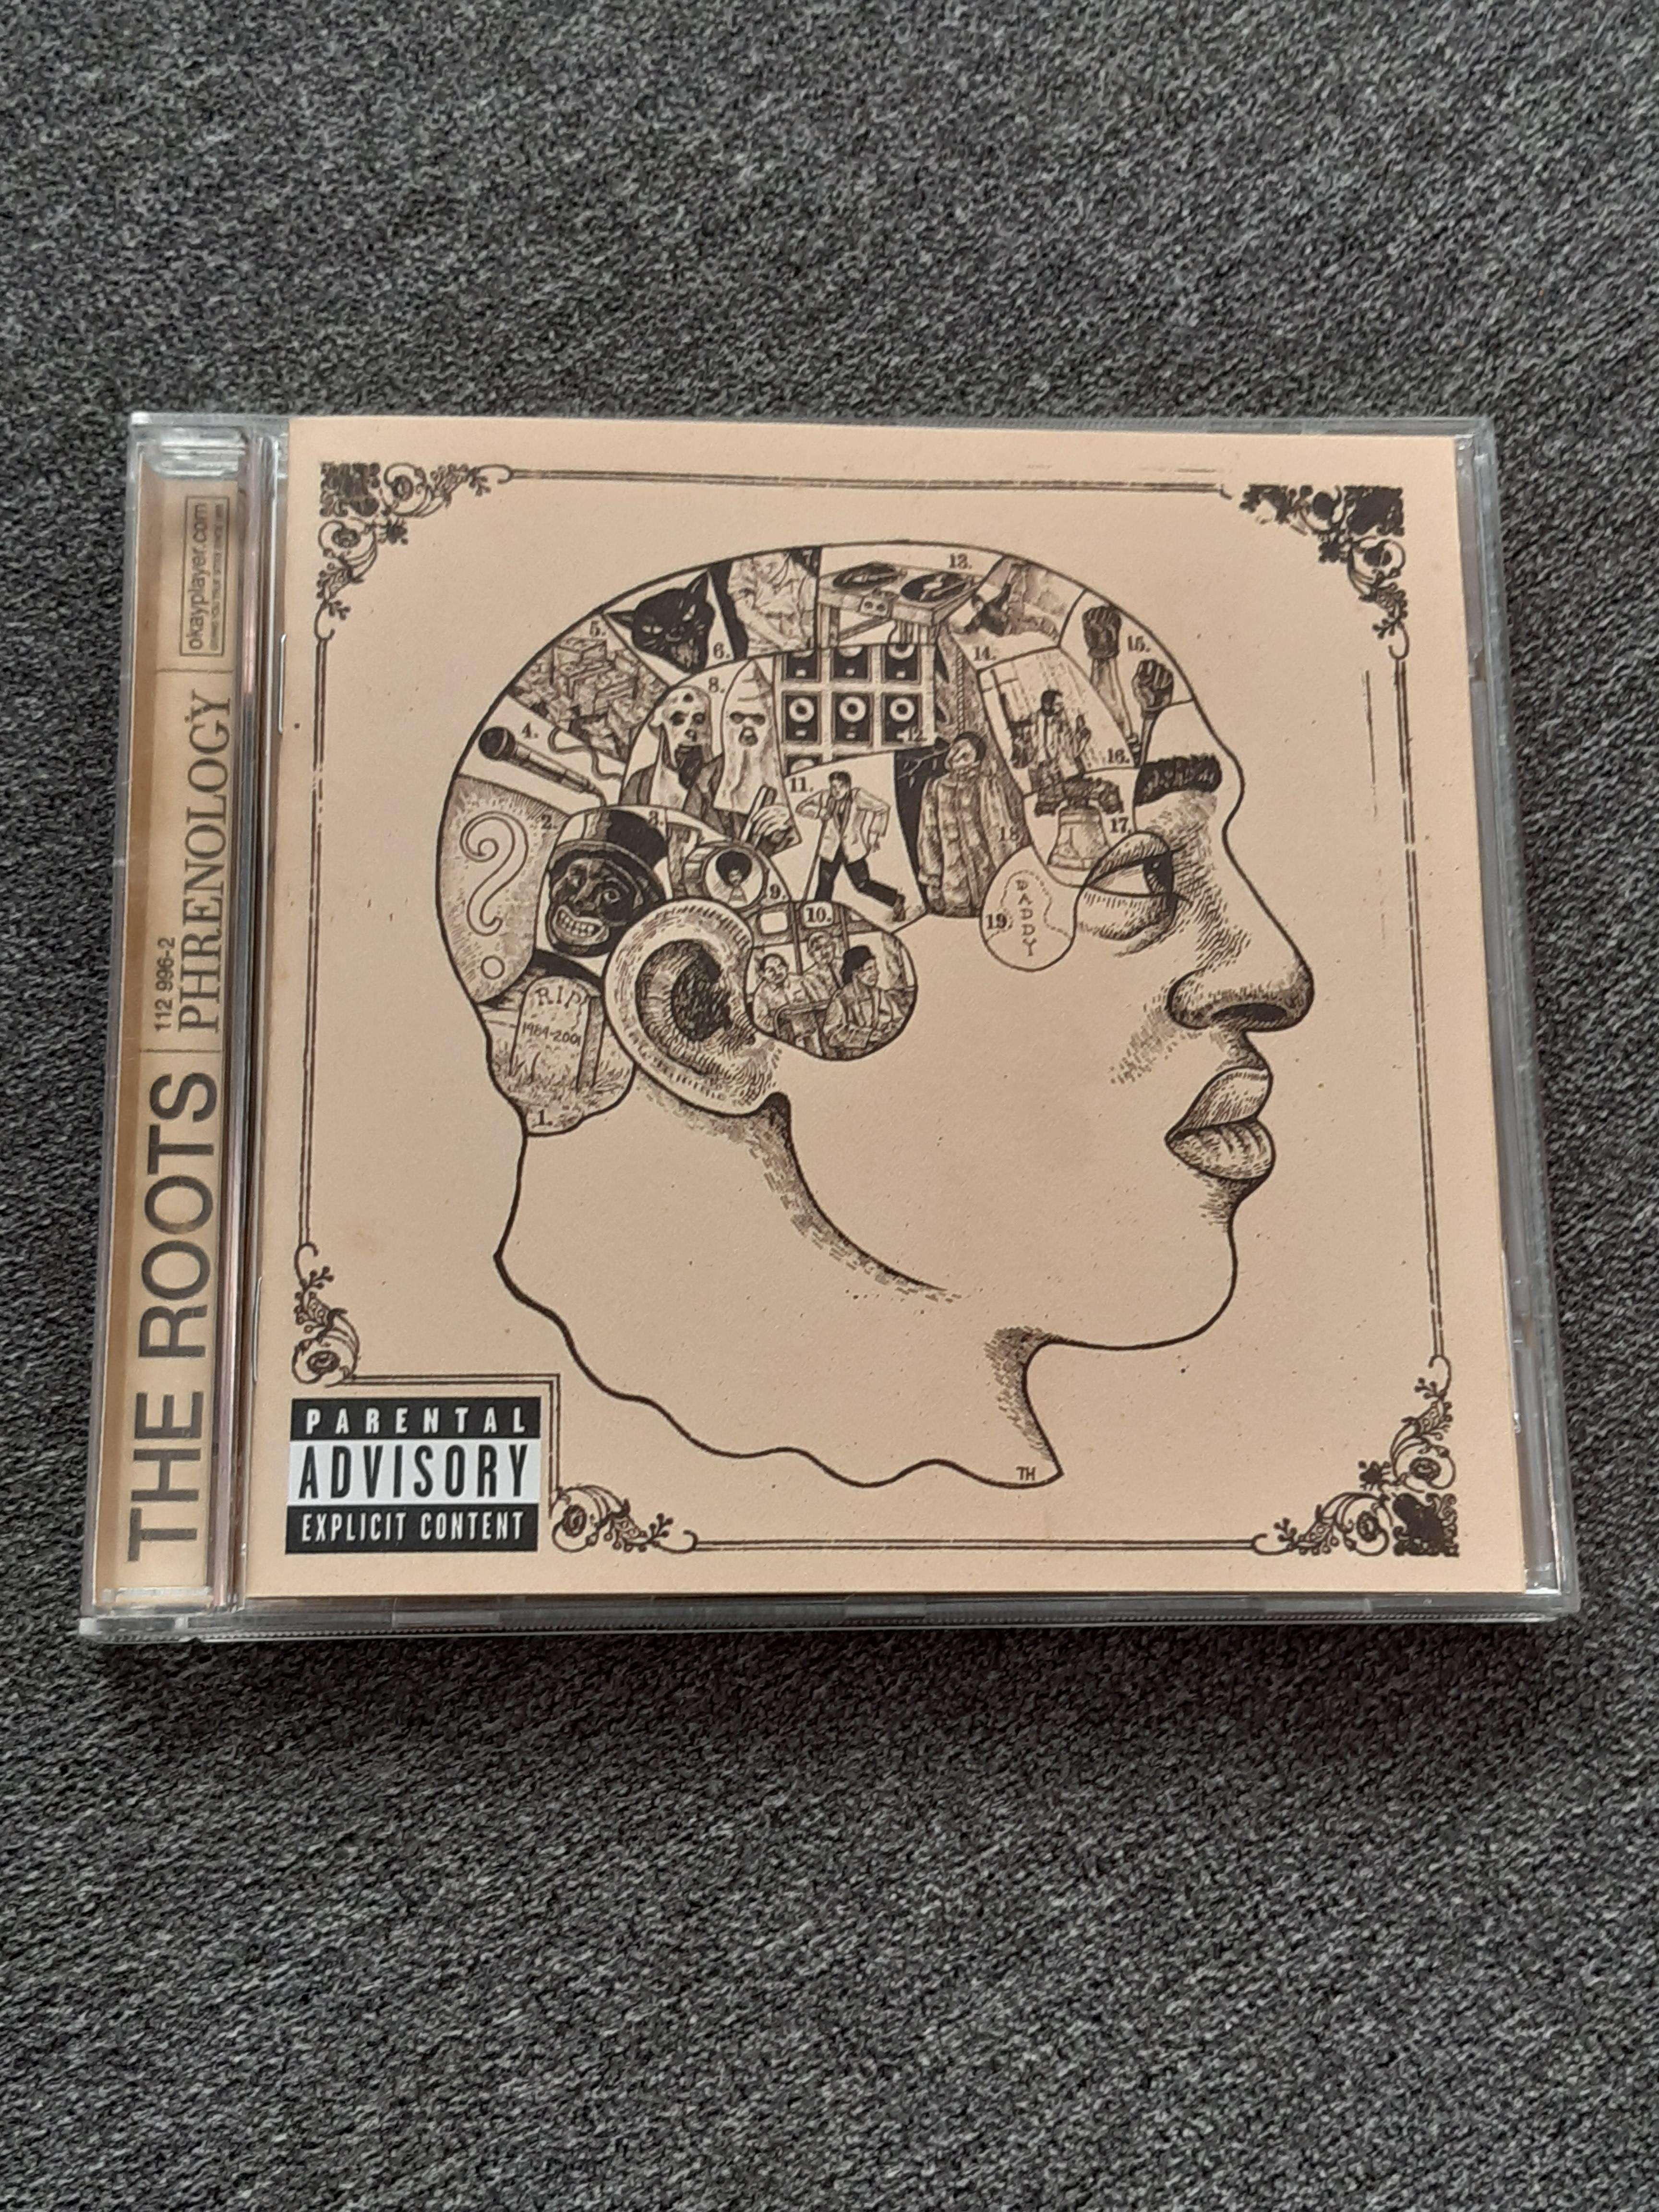 The Roots - Phrenology - CD (käytetty)